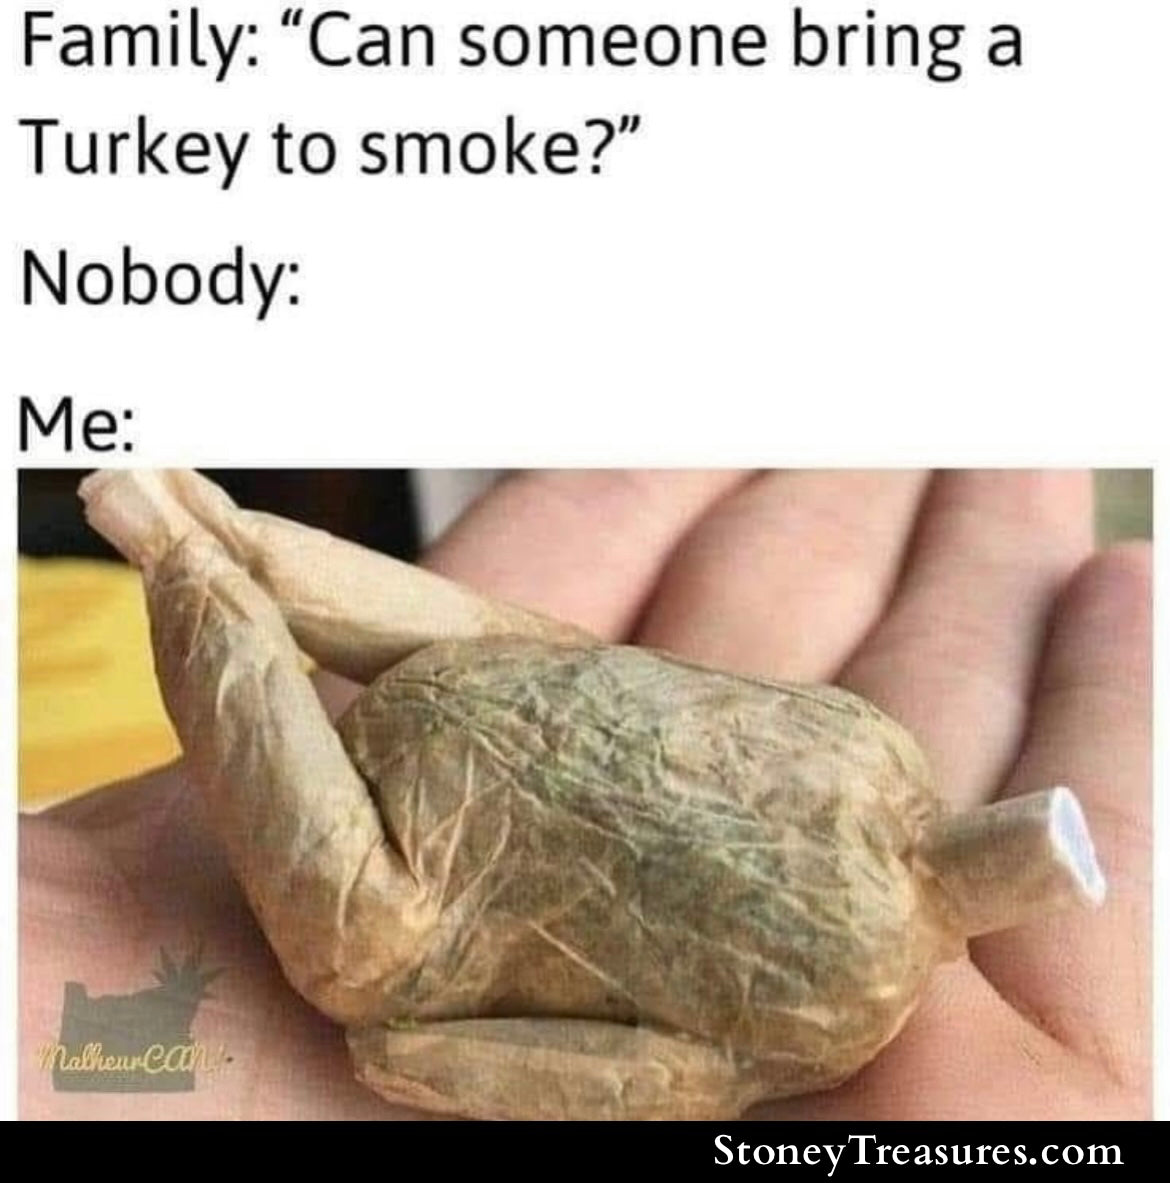 Can someone bring a turkey to smoke?